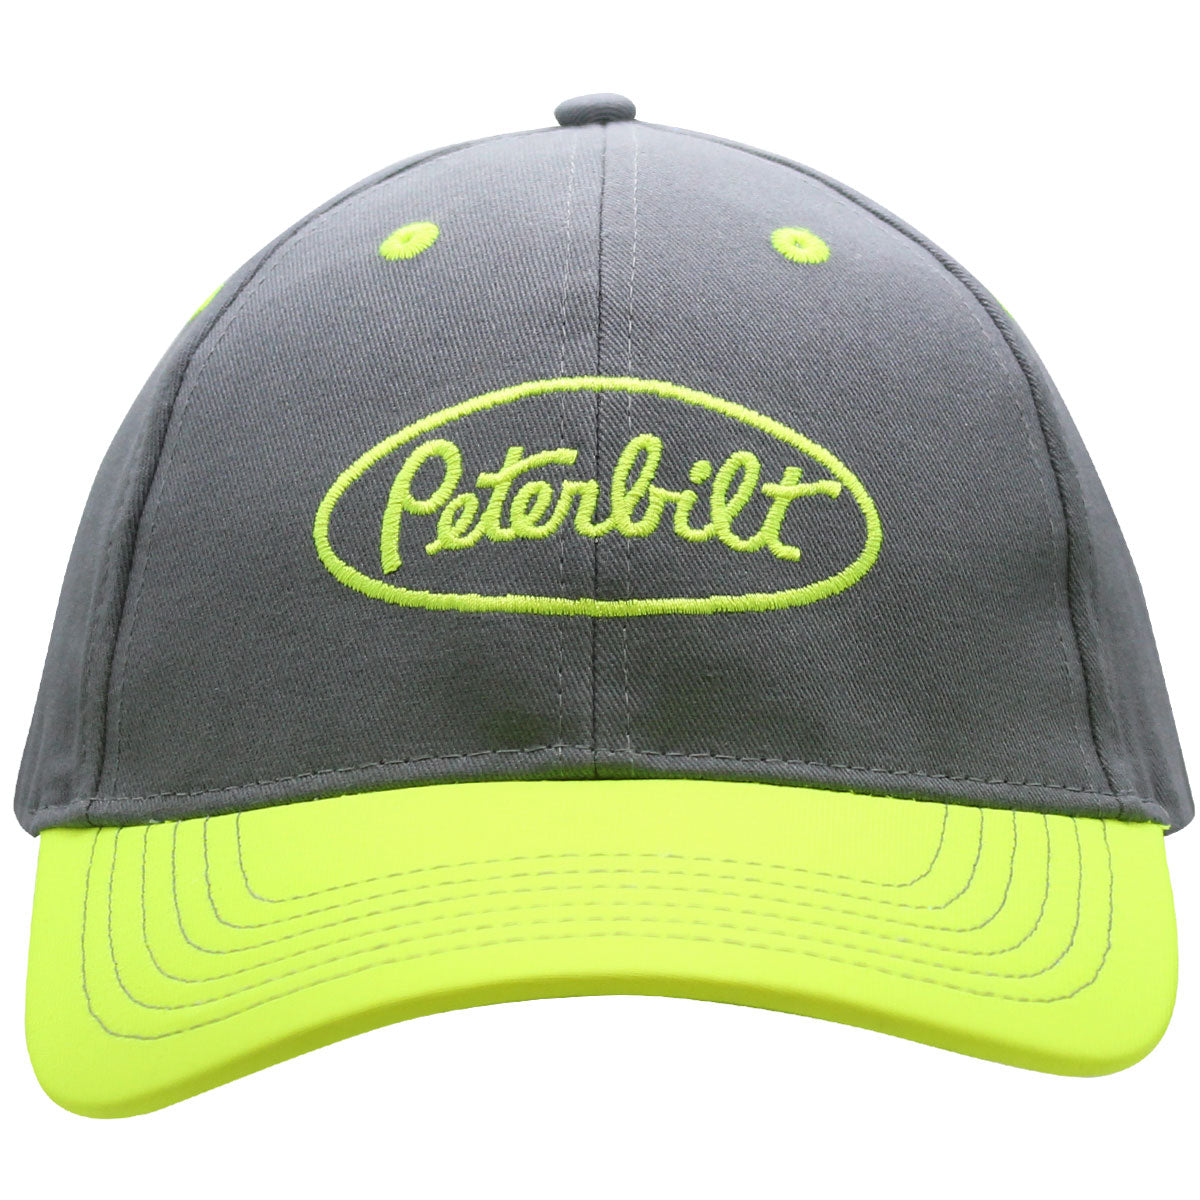 Peterbilt High-Visibility Hat